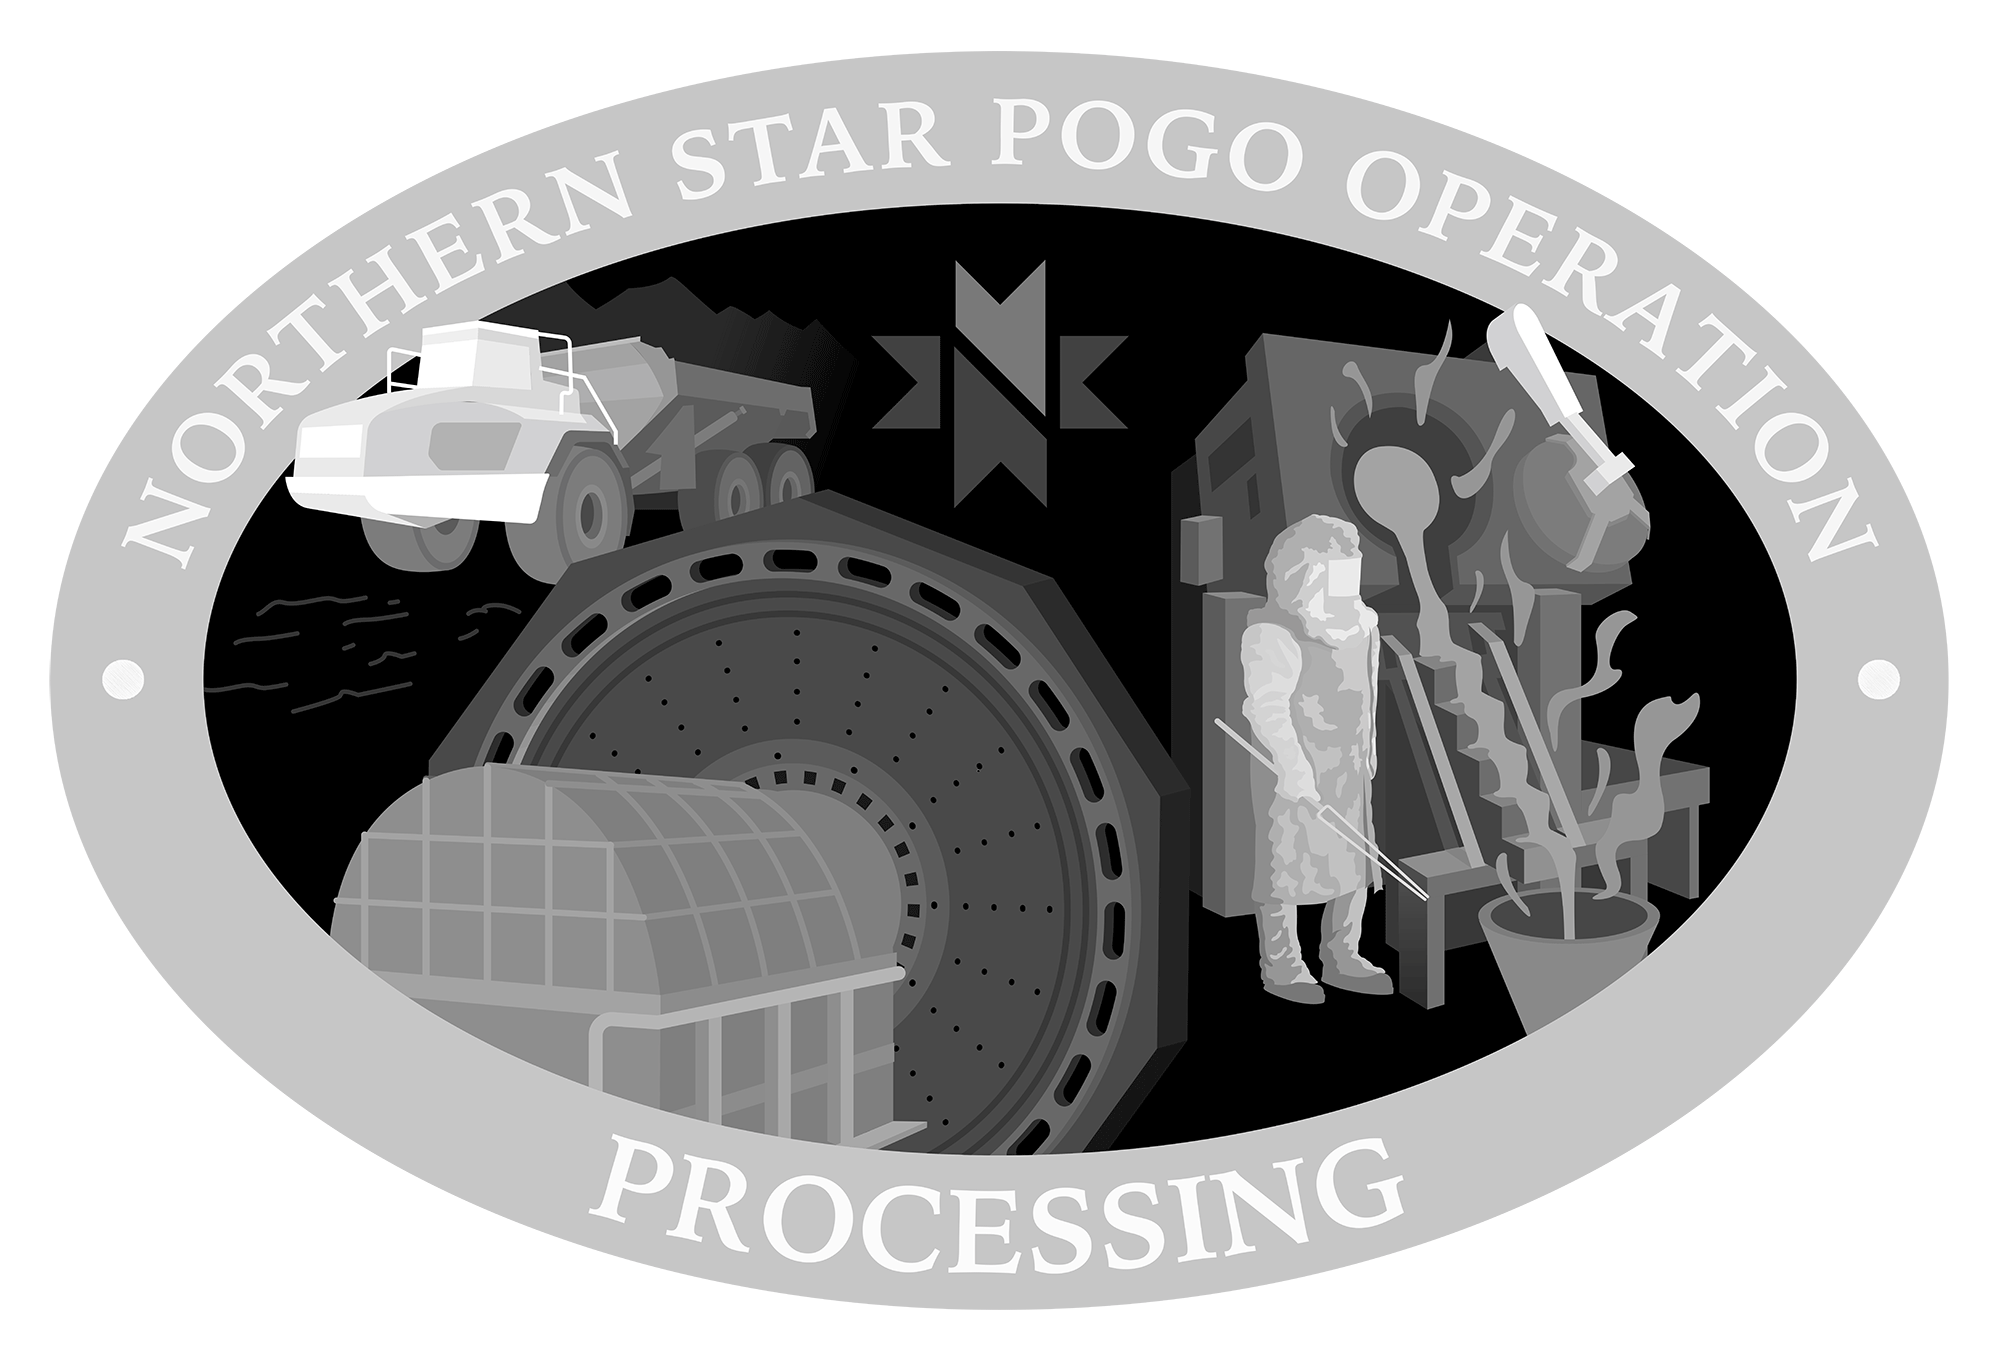 A belt buckle mockup design of the Northern Star Pogo Operation Processing logo